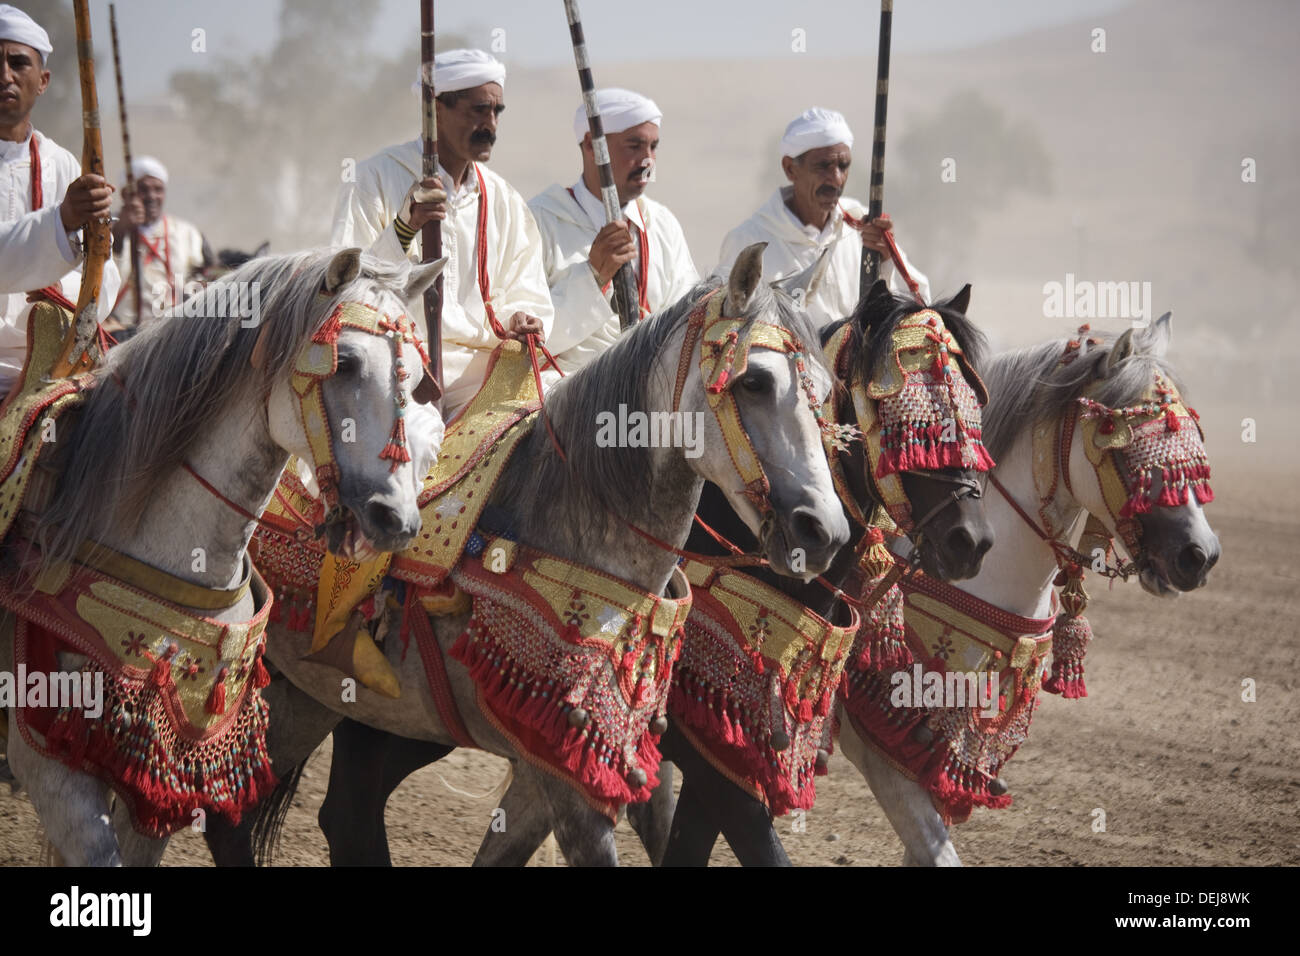 Fantasia riders at the Tissa horse festival near Fez, Morocco Stock Photo